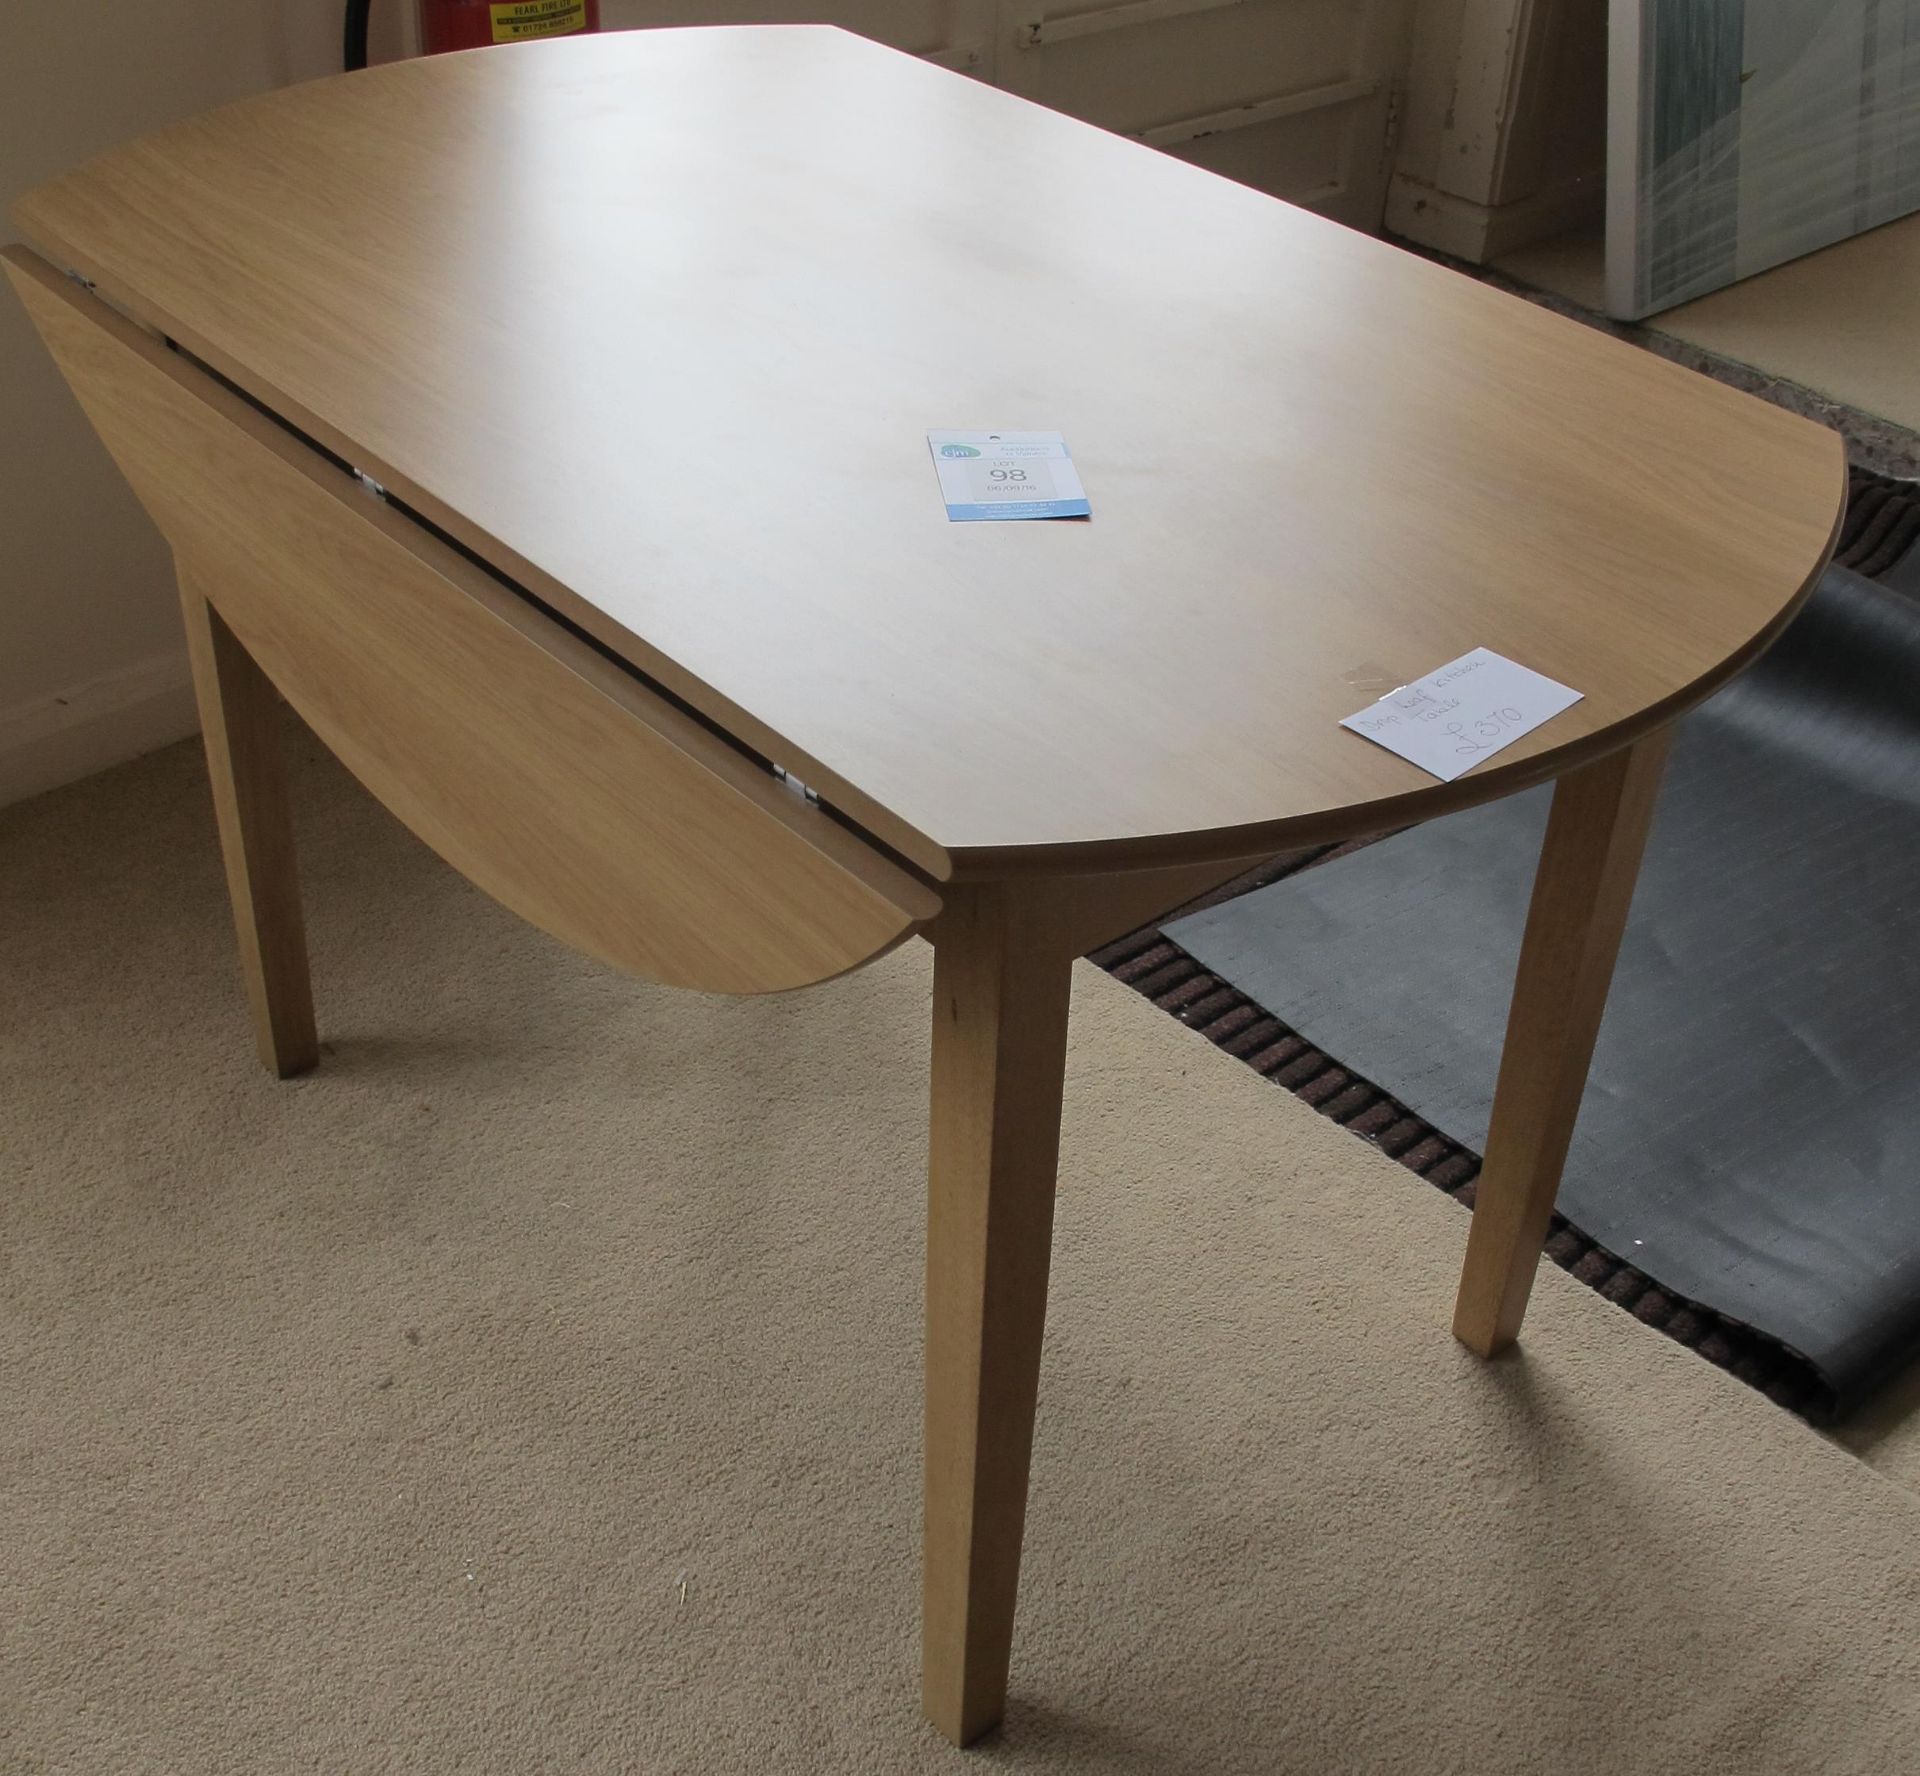 Circular drop leaf kitchen table. 120cm diameter. RRP £370